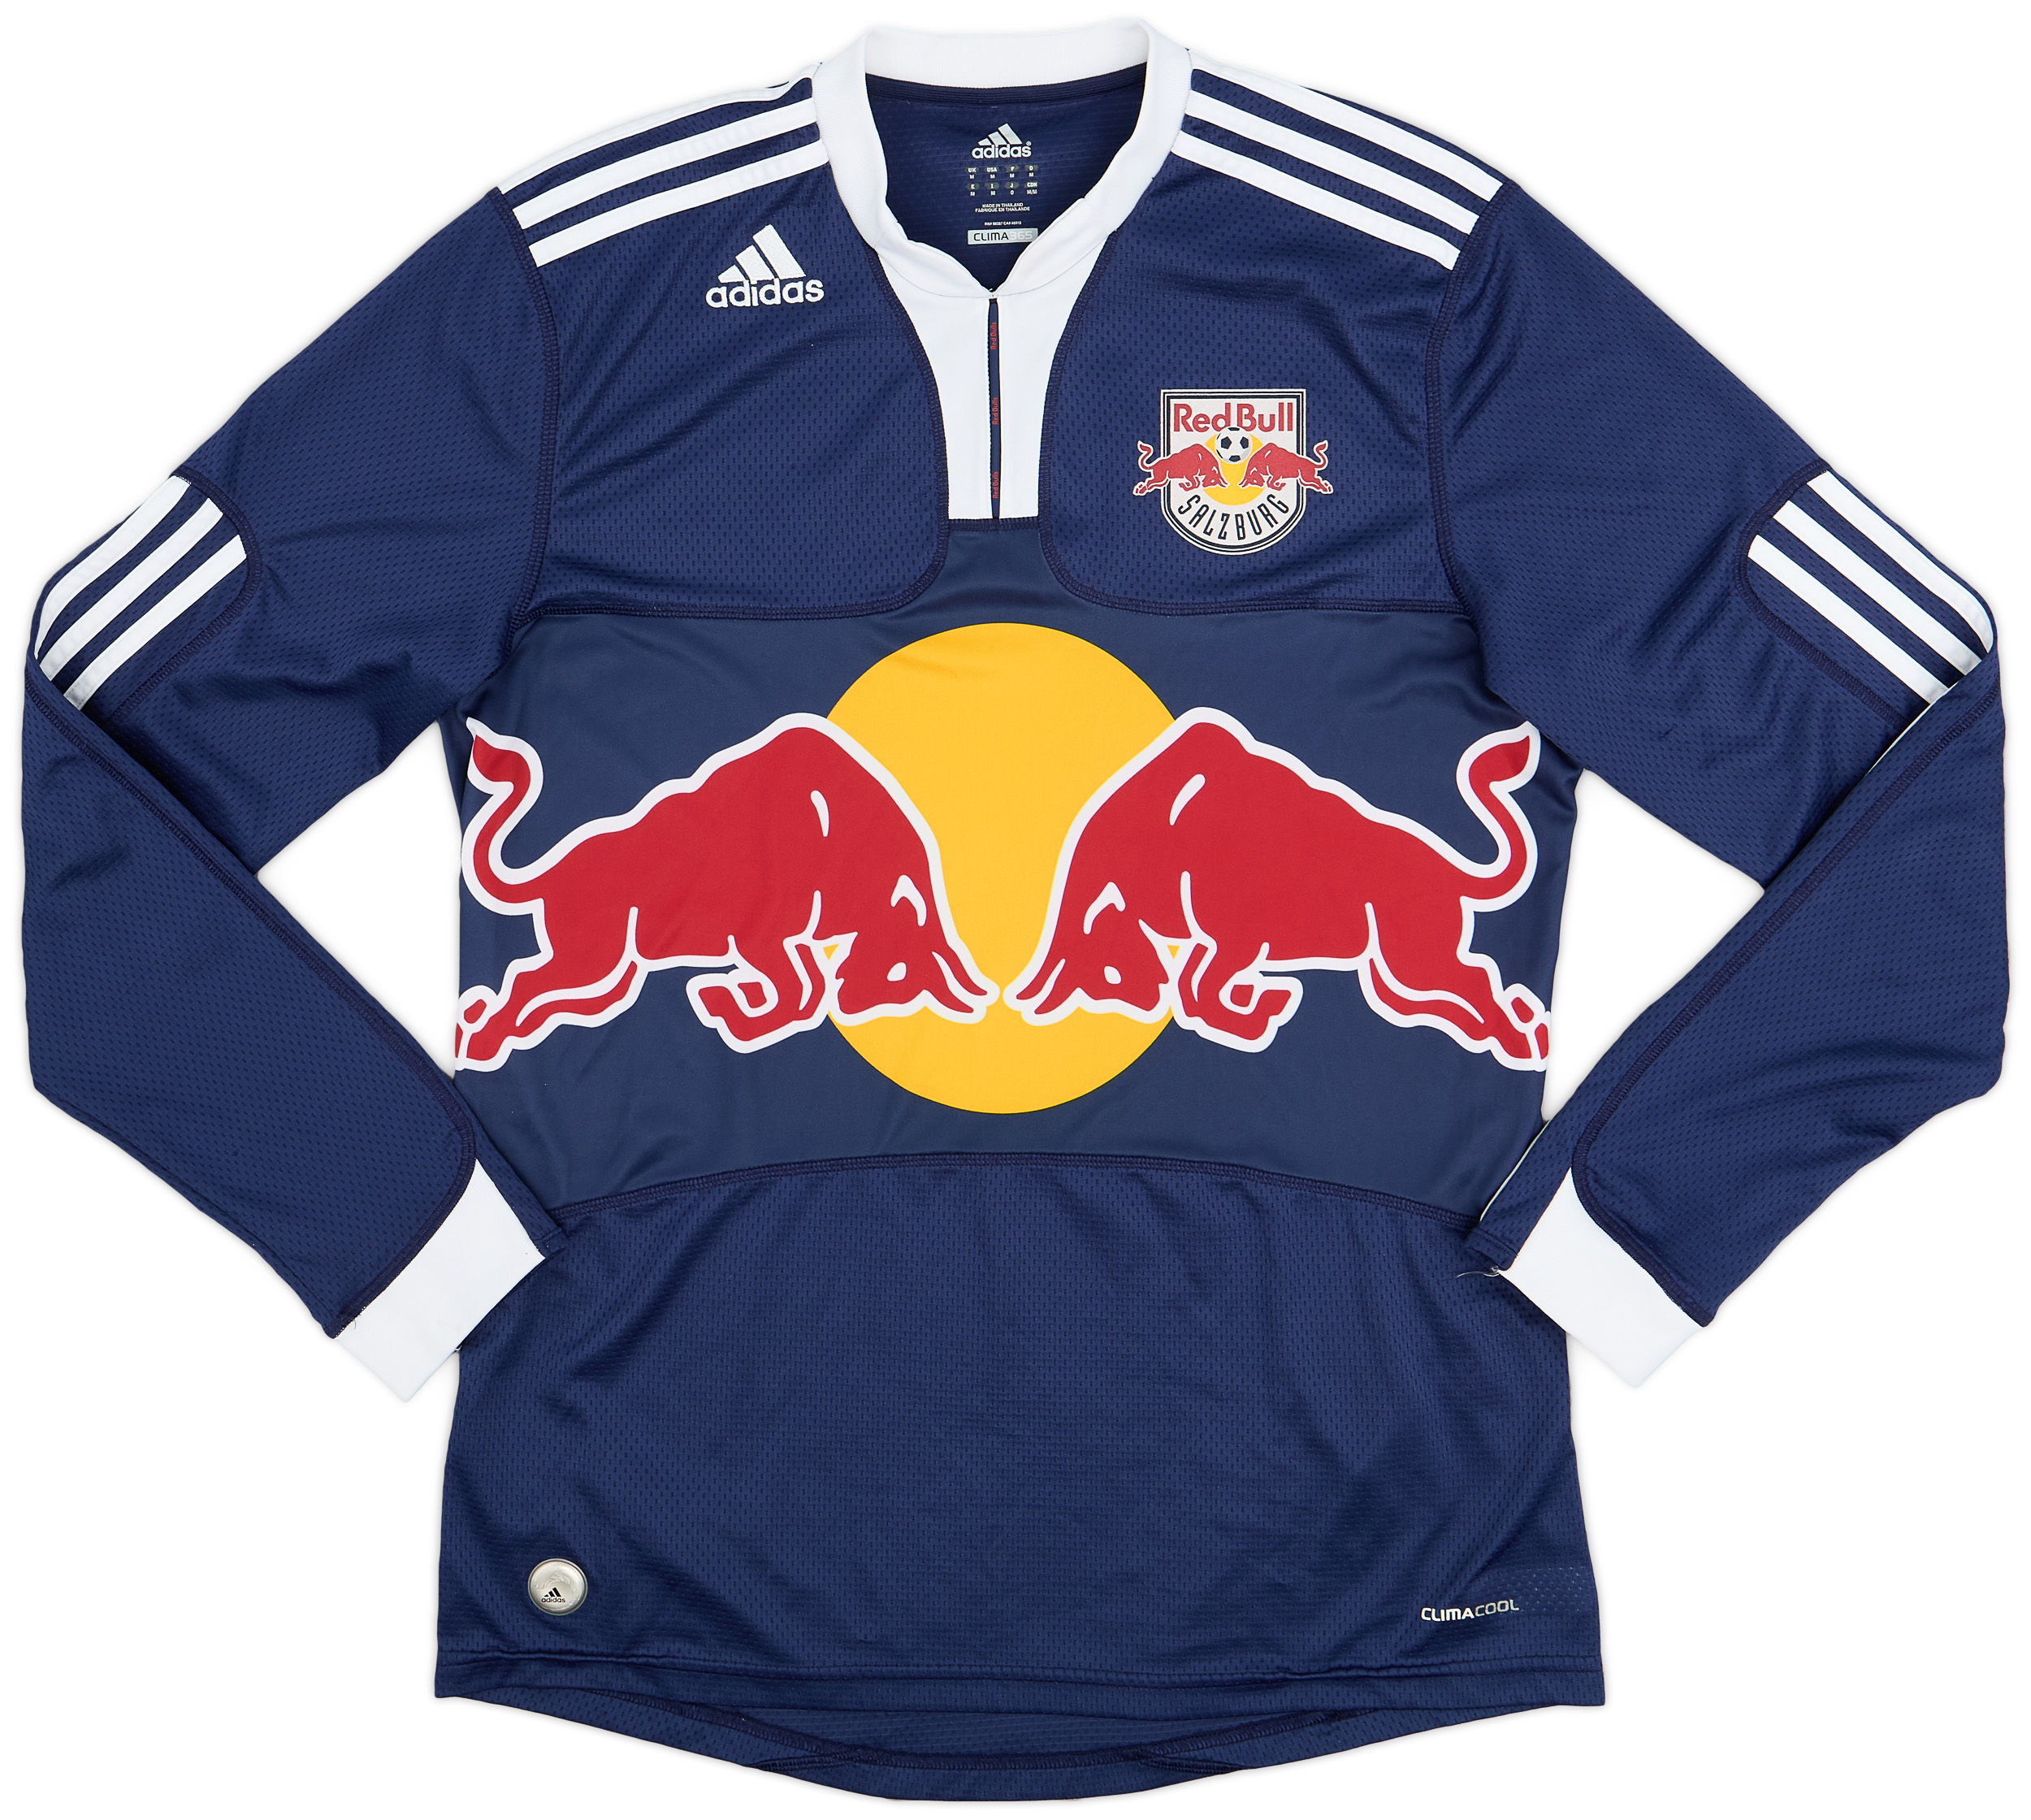 2010-11 Red Bull Salzburg Away Shirt - 8/10 - ()